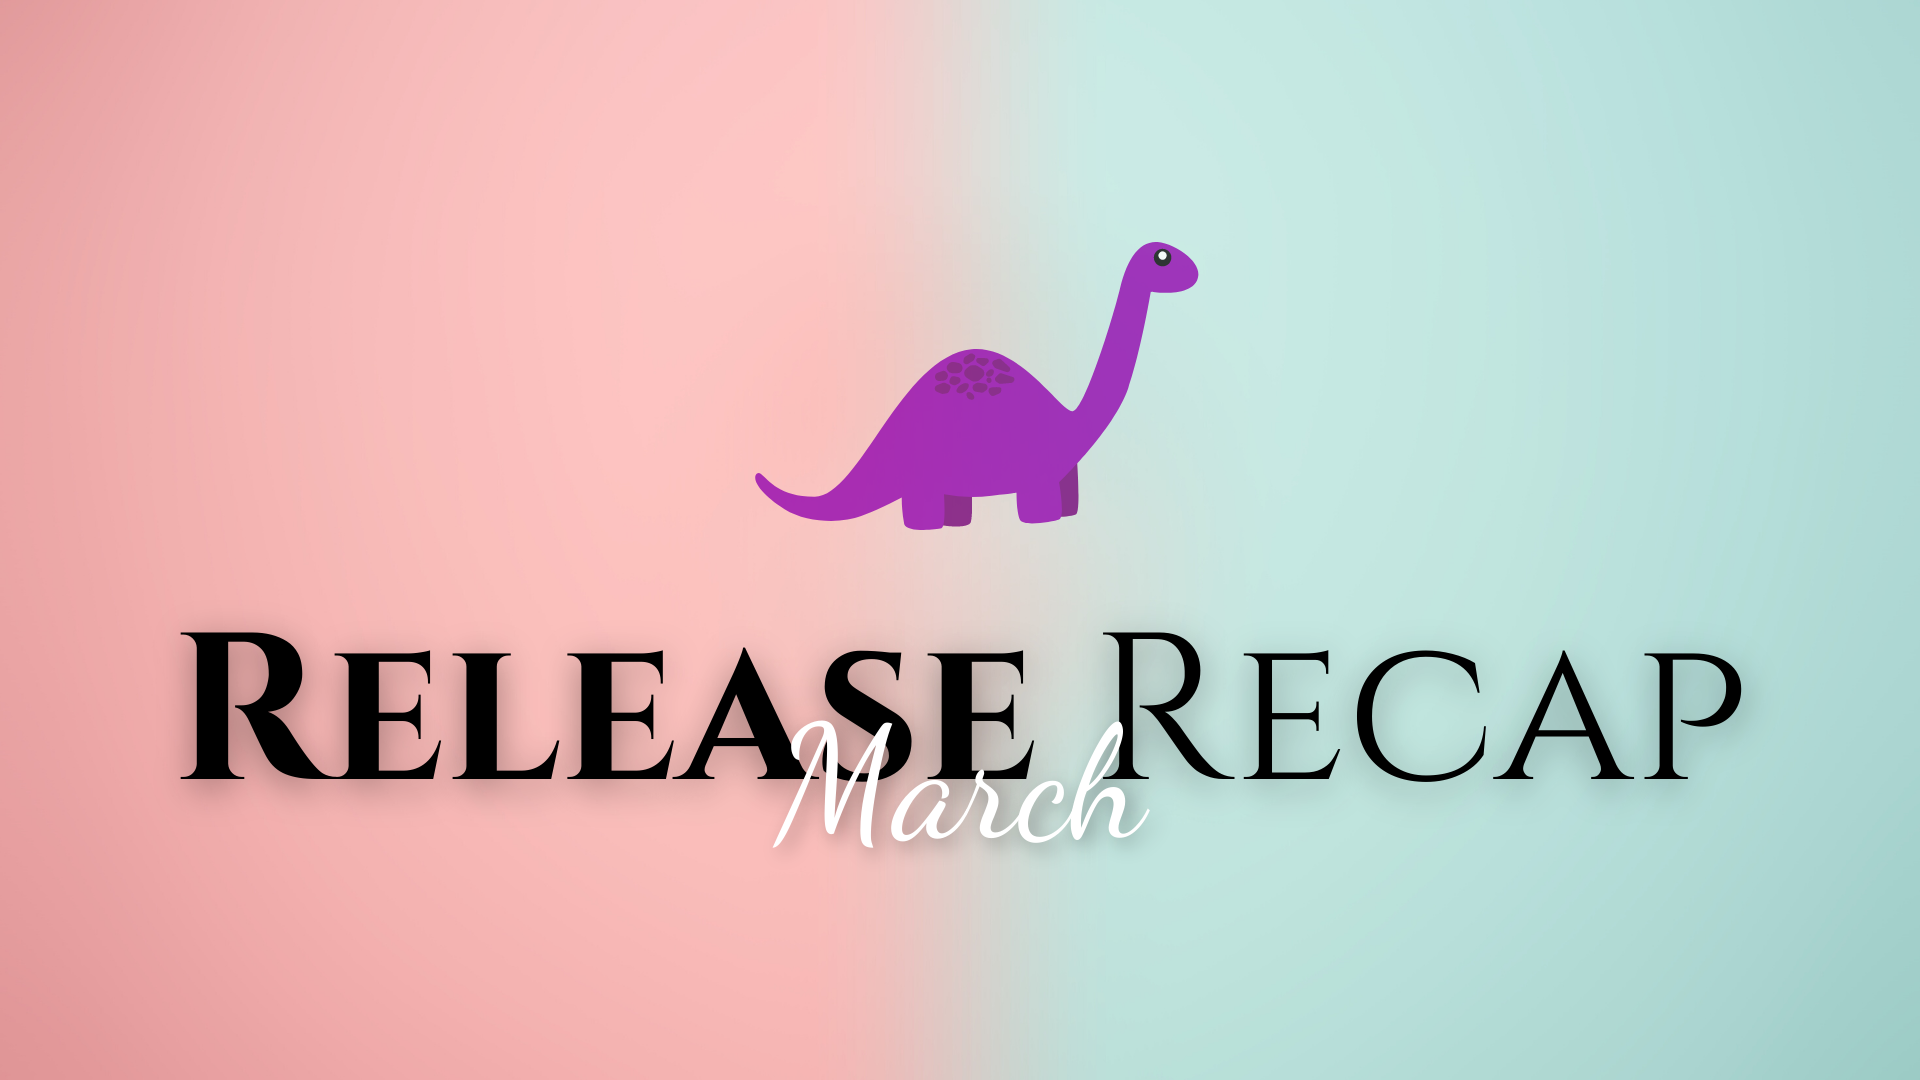 March Release Recap